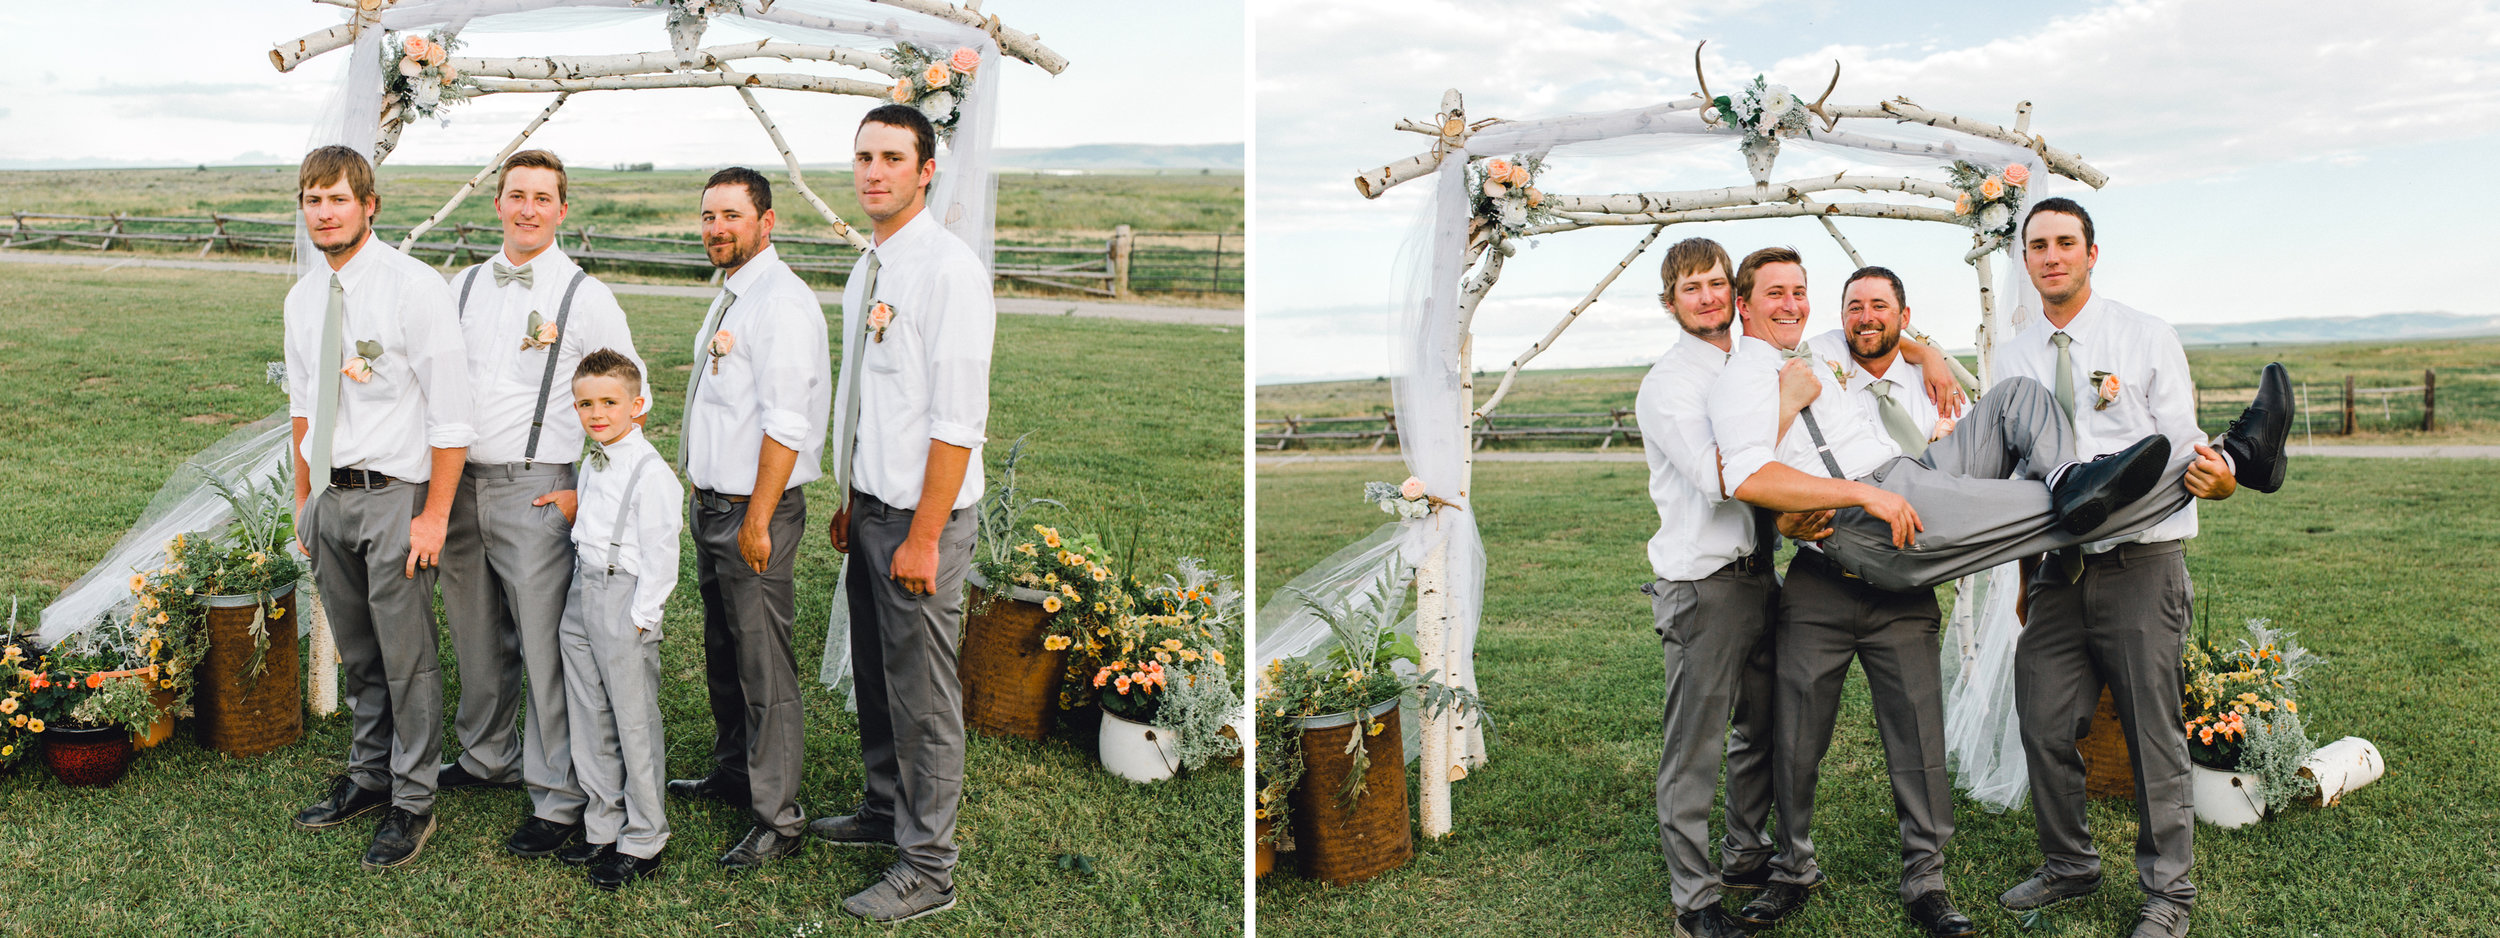 country-outdoor-rustic-wedding-tetons-idaho-anna-christine-photo-7.jpg